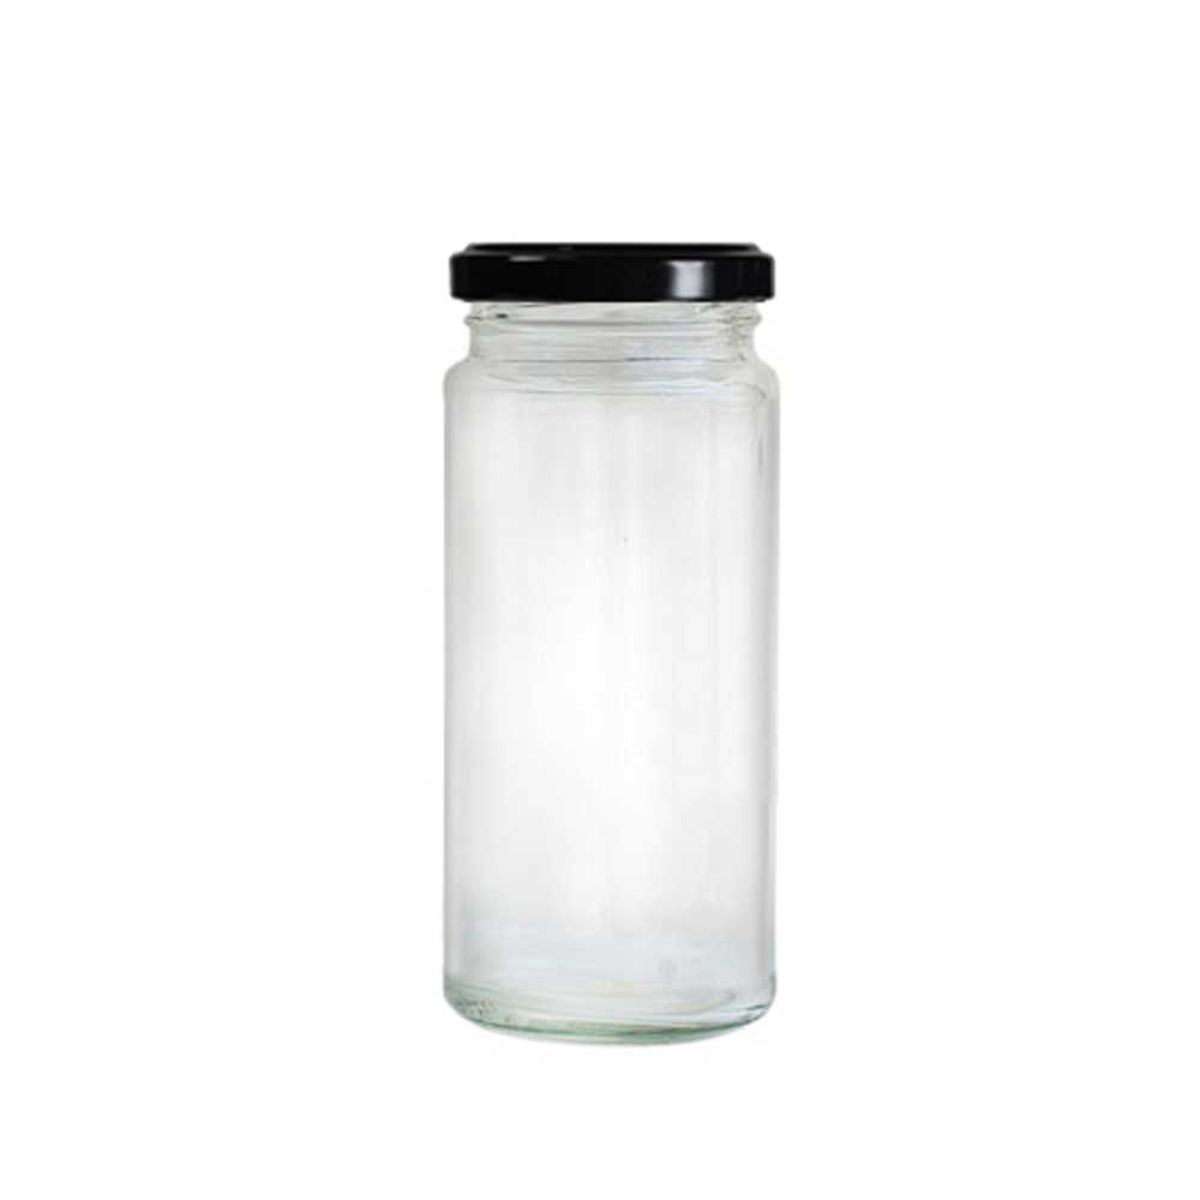 250ml Bamboo Glass Jar with 53mm Lug Cap